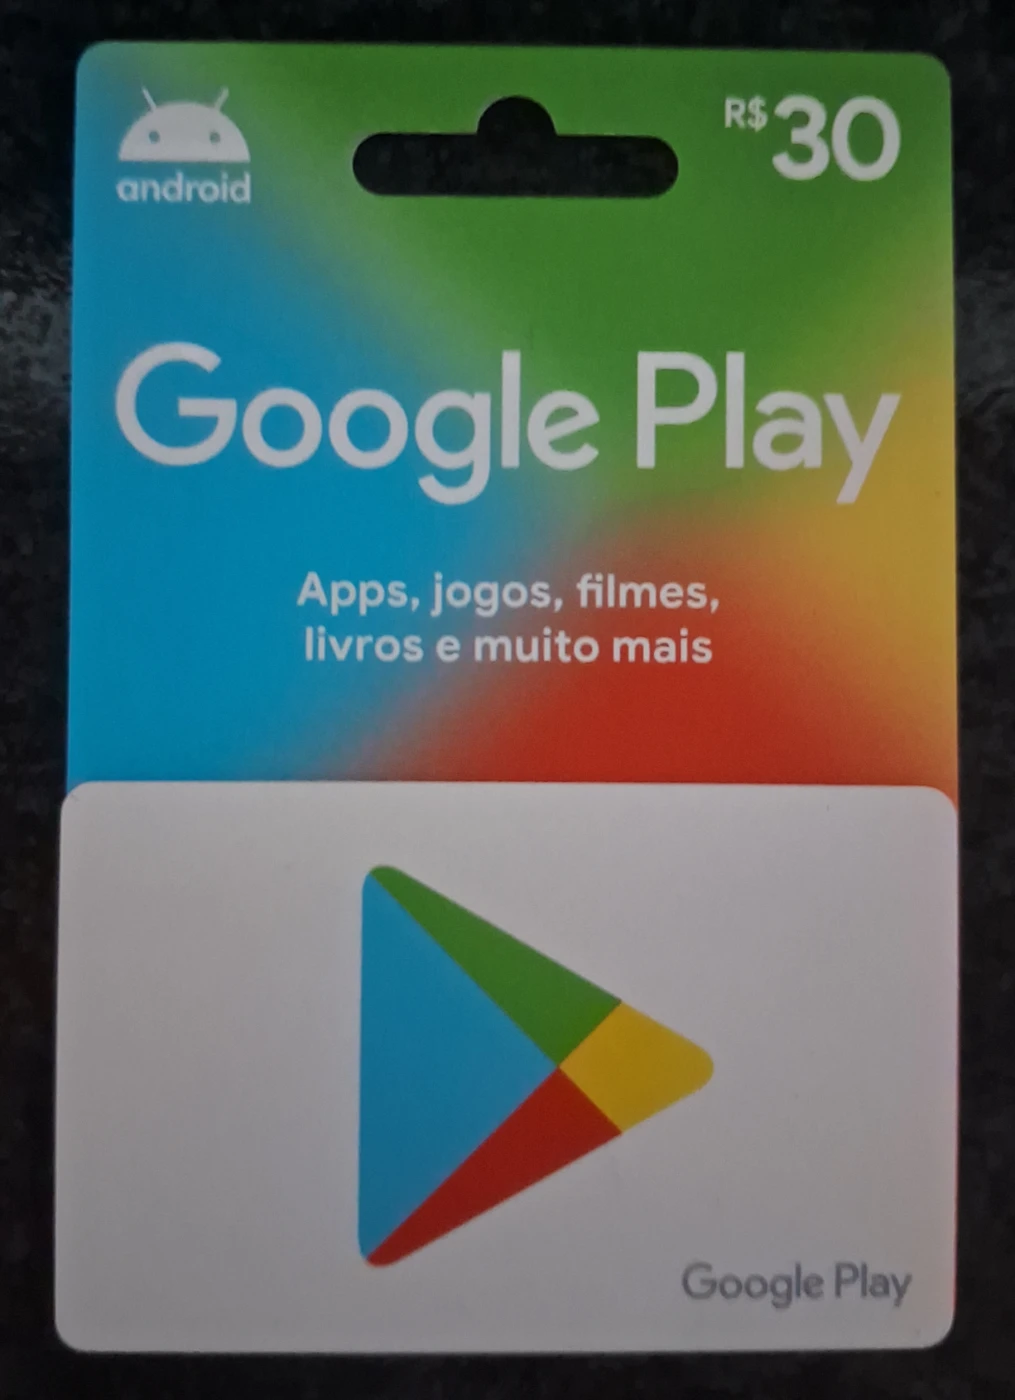 Comprar Cartão Stumble Guys Google Play R$30 Reais - R$30,00